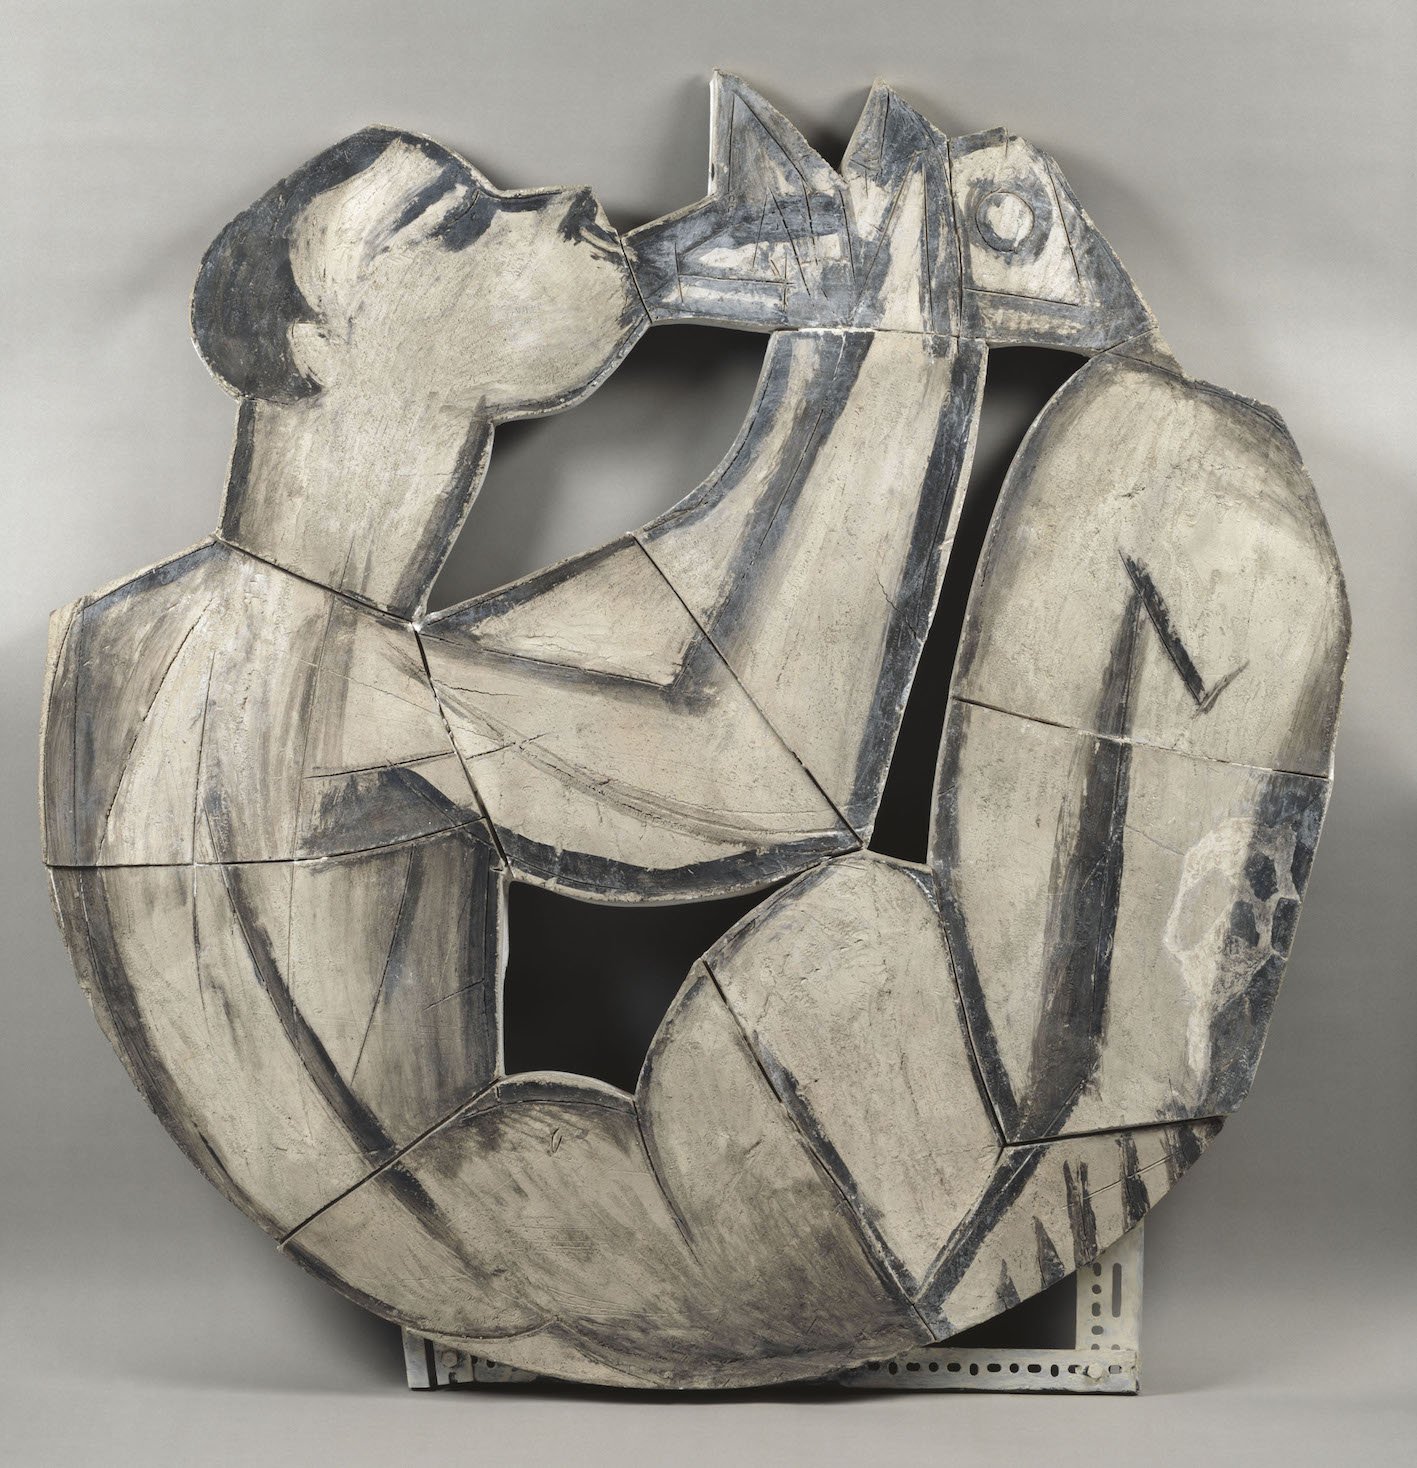 Pablo Picasso, Suonatore di flauto doppio seduto, 1958 terracotta, 126,5x125,5x2 cm Paris, Musée National Picasso. Credito fotografico:© RMN-Grand Palais (Musée national Picasso-Paris) /Gérard Blot/ dist. Alinari